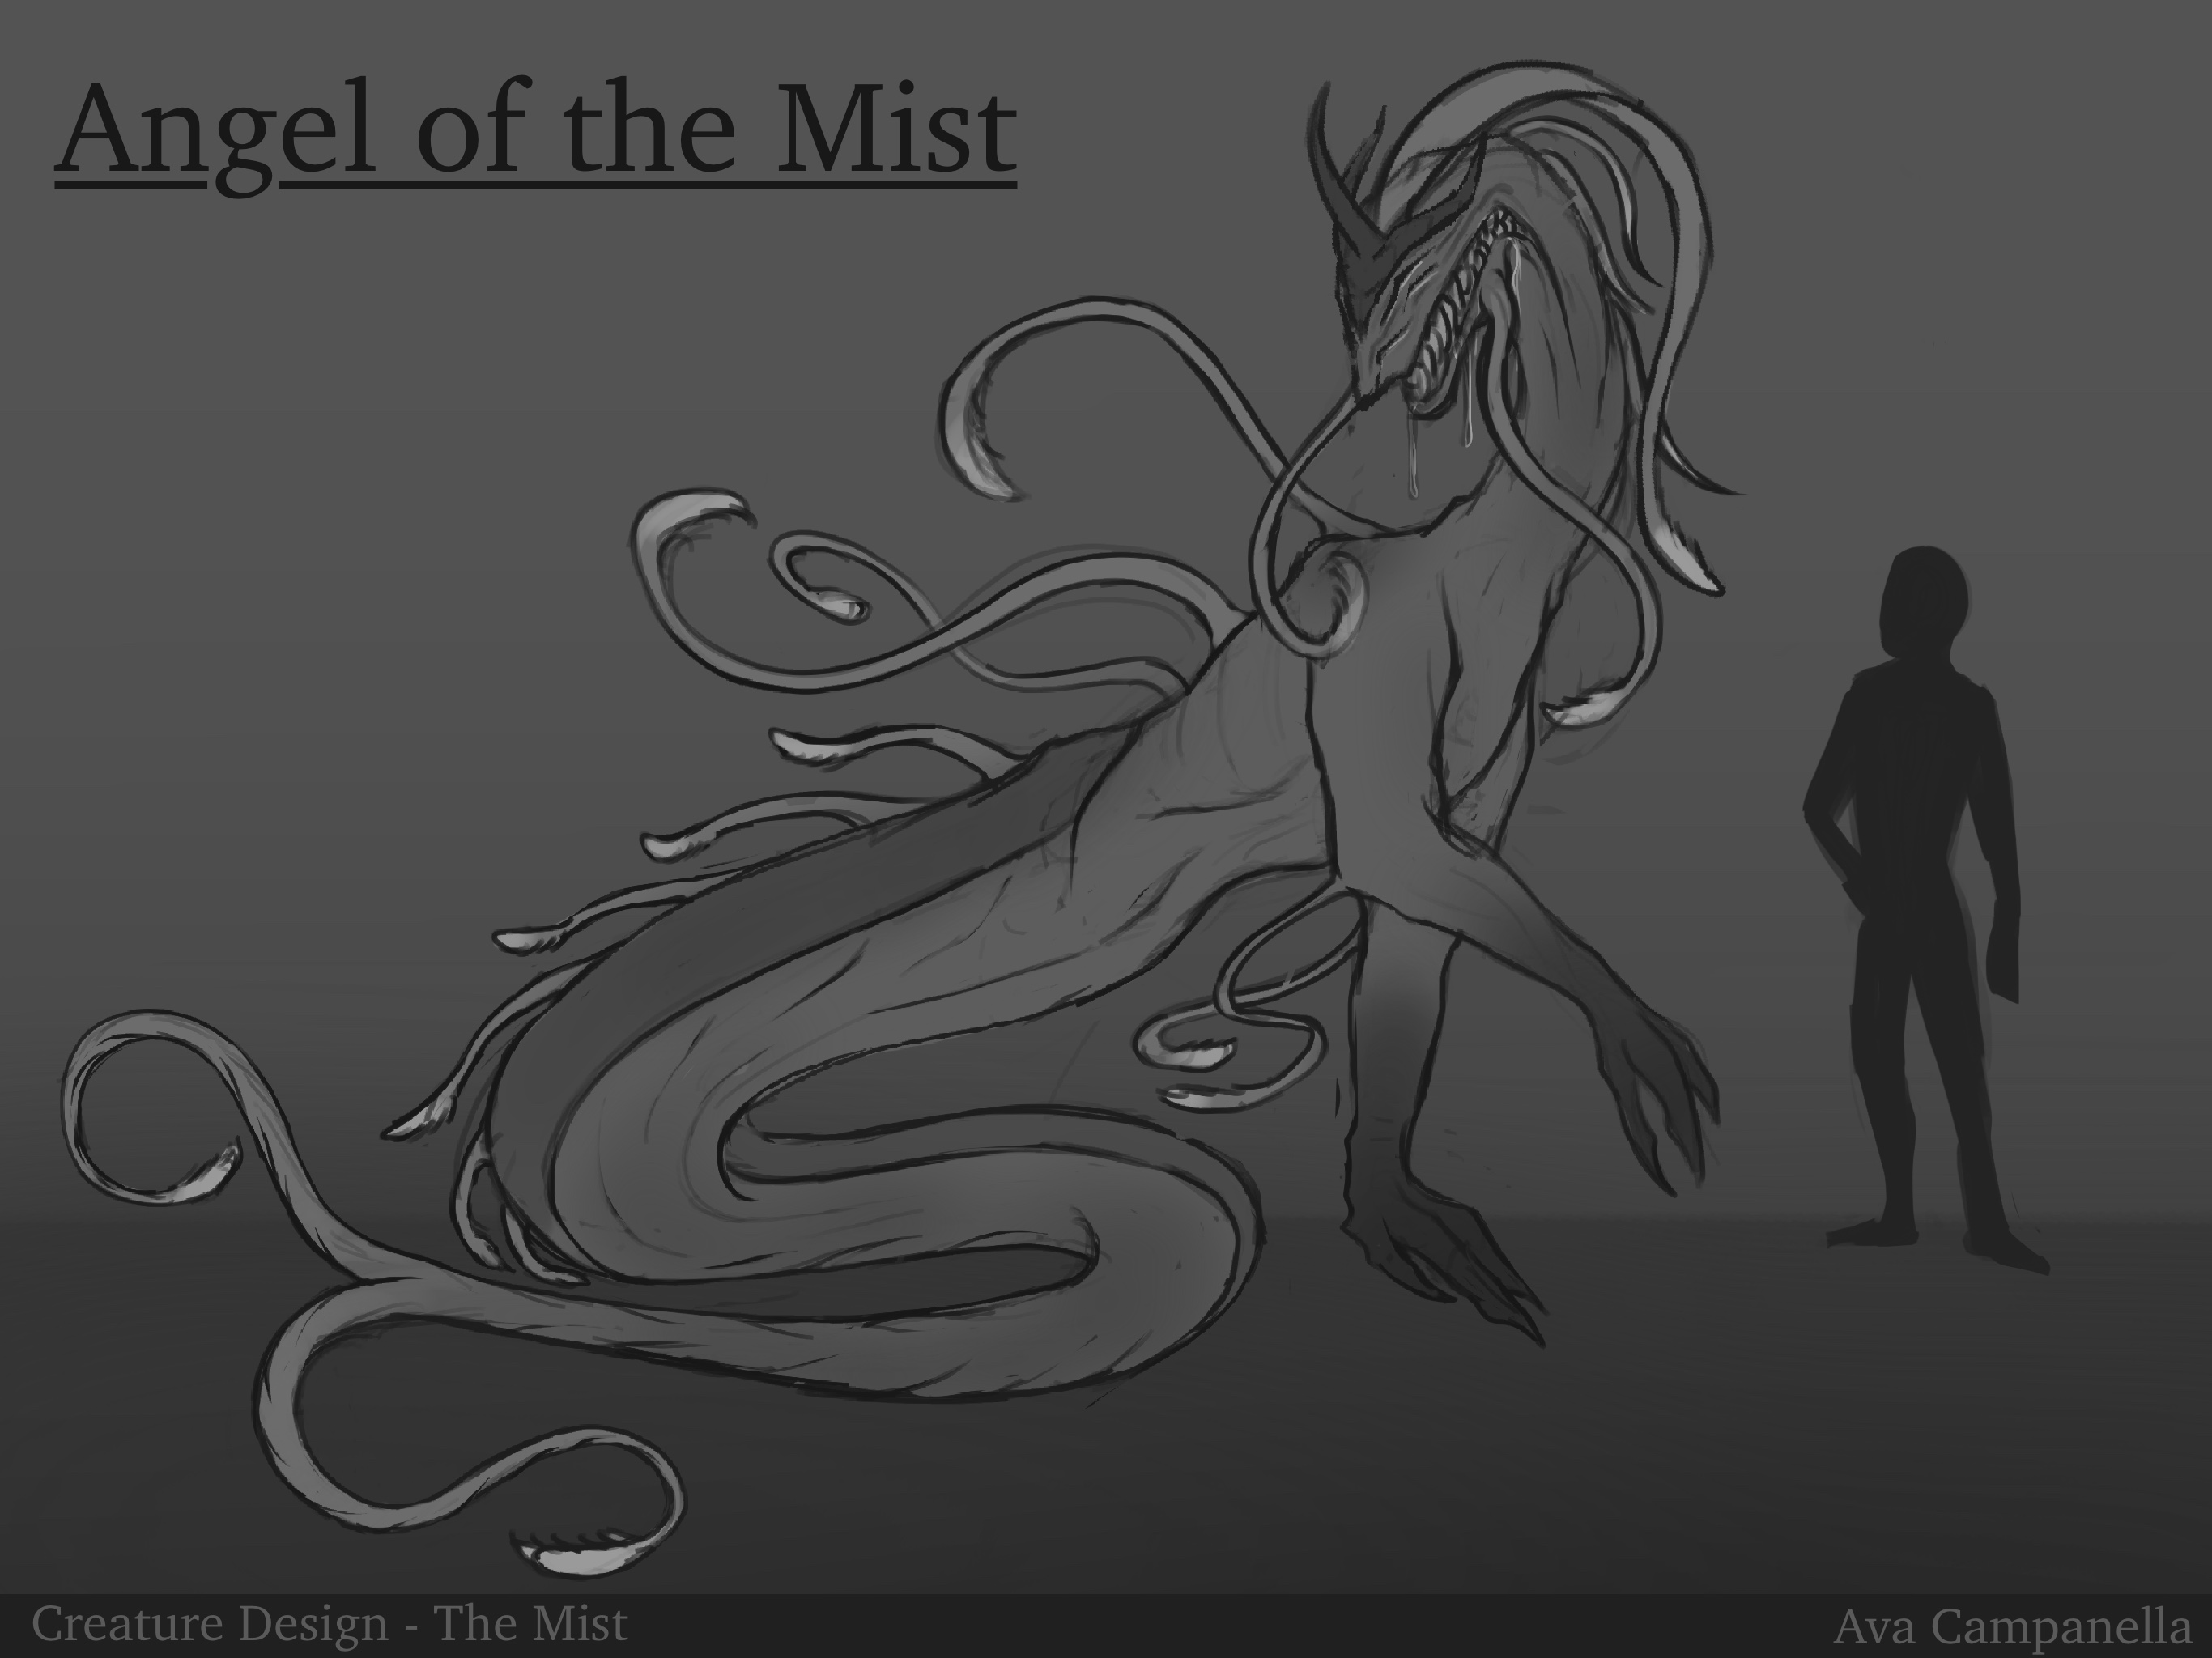 Creature Design - Angel of the Mist